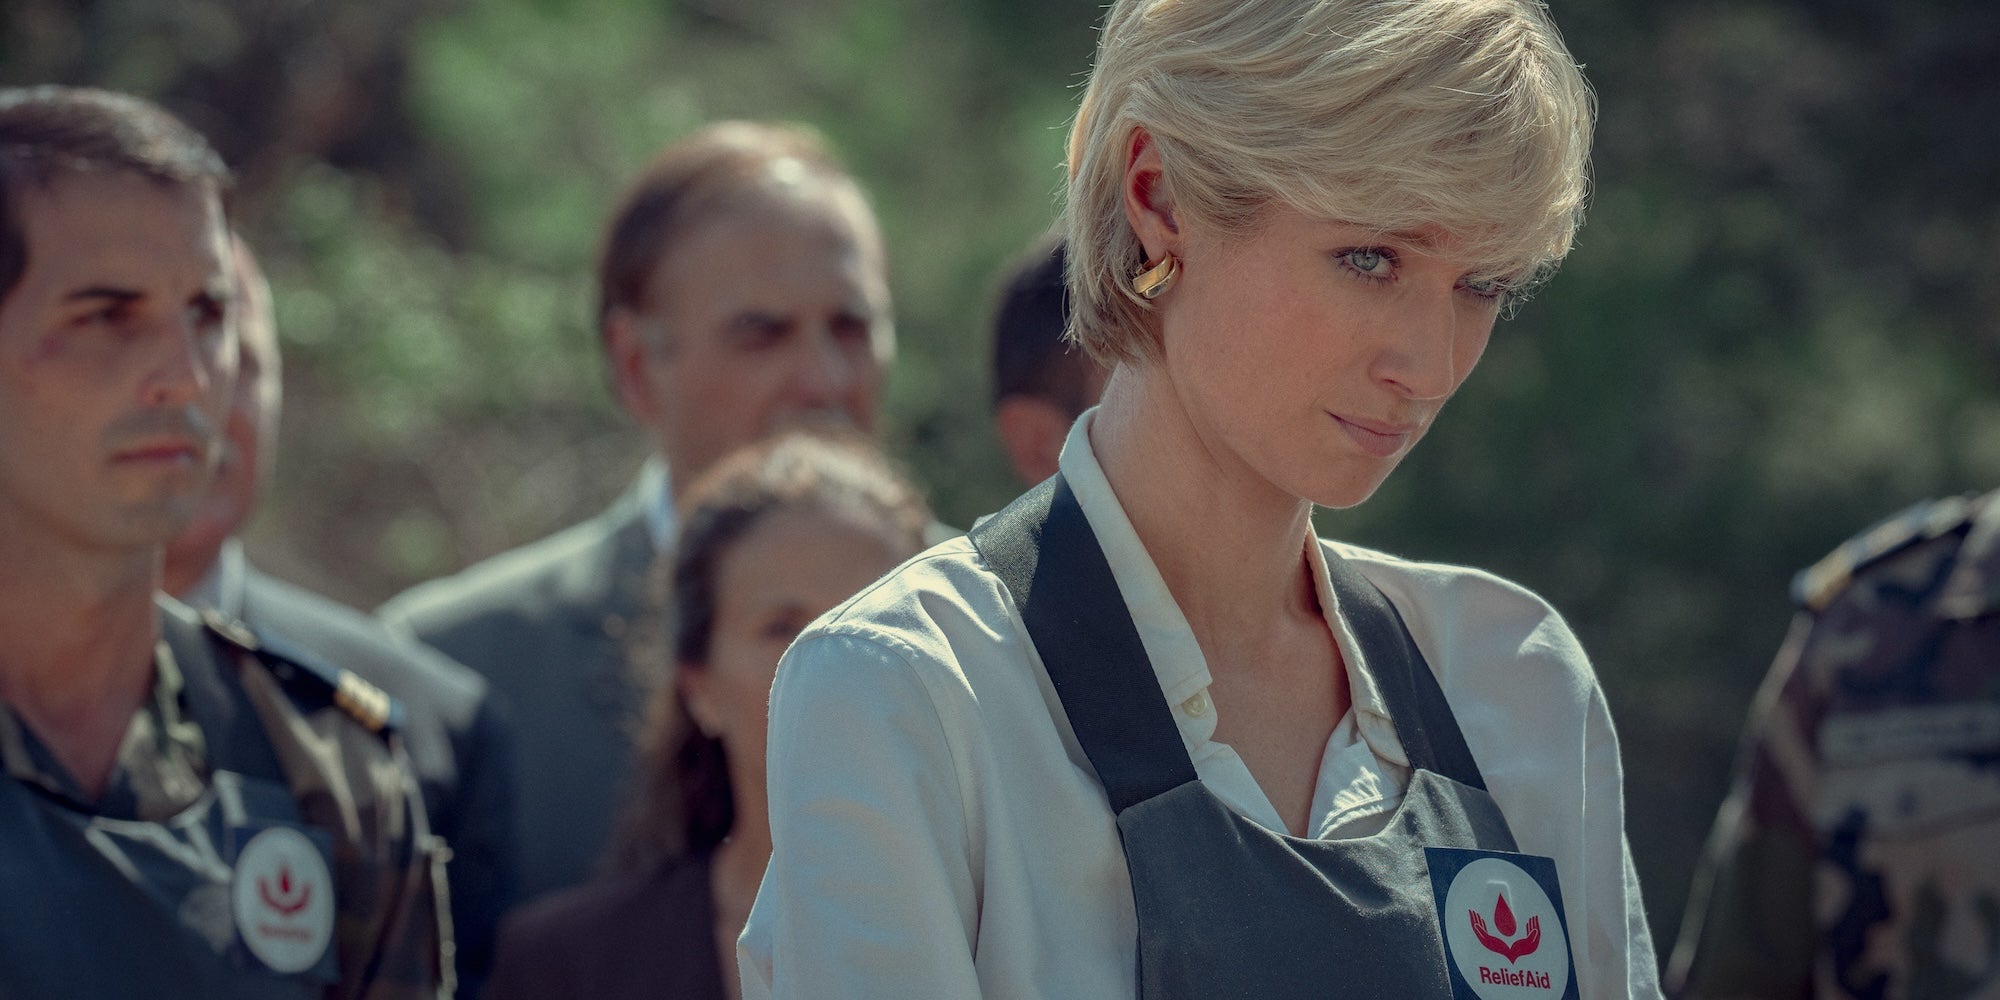 Elizabeth Debicki as Princess Diana in Season 6 of "The Crown" on Netflix.